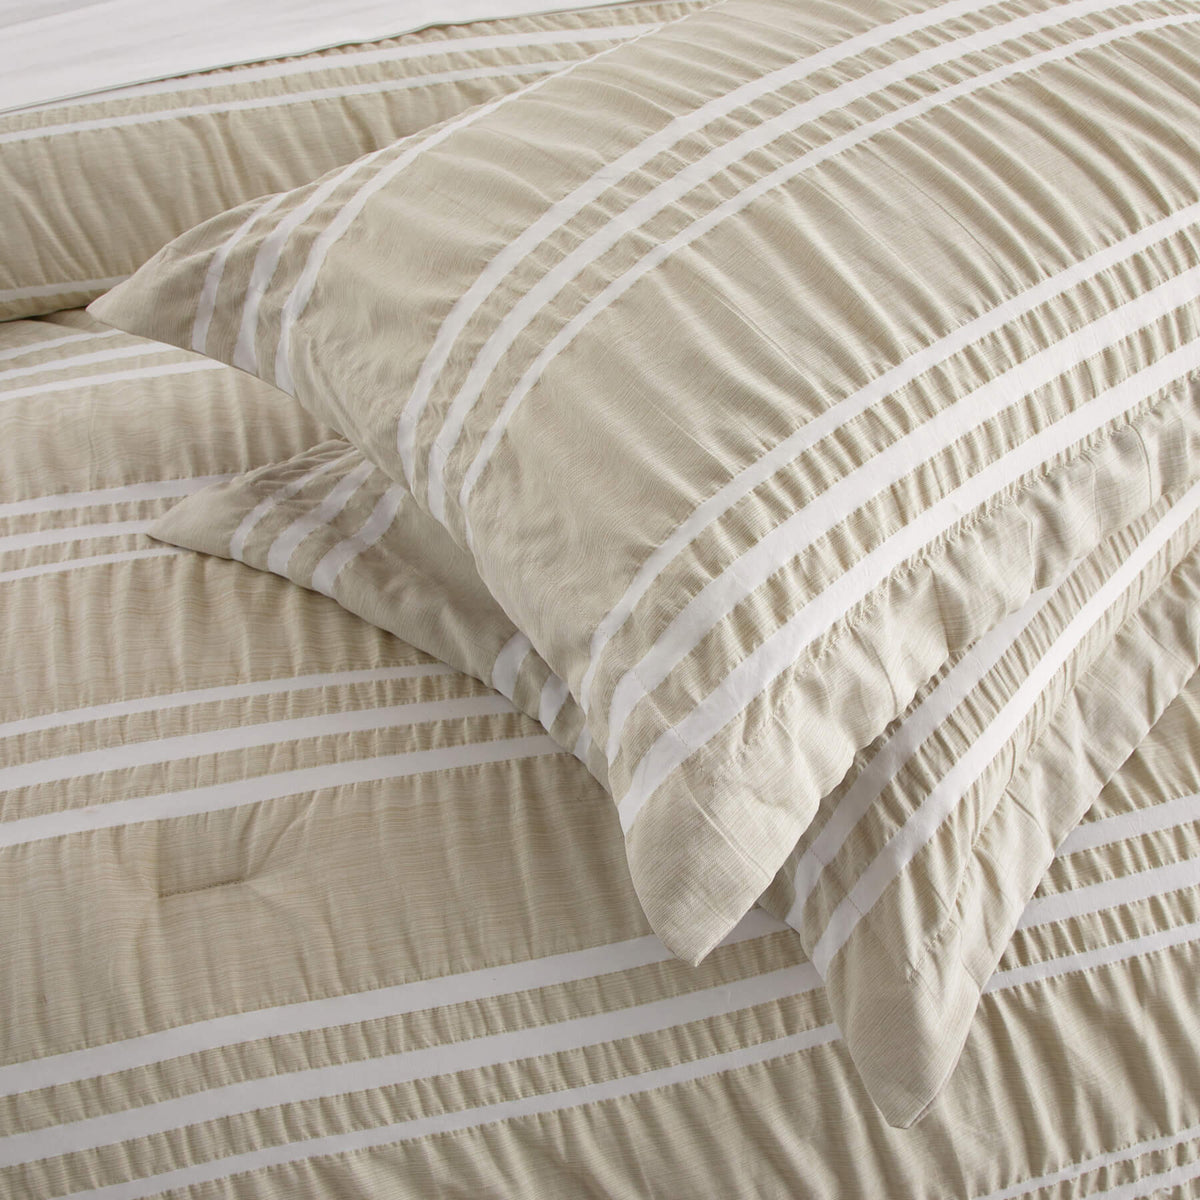 Chic-Home-Emma 8 Piece Striped Seersucker Comforter Set-